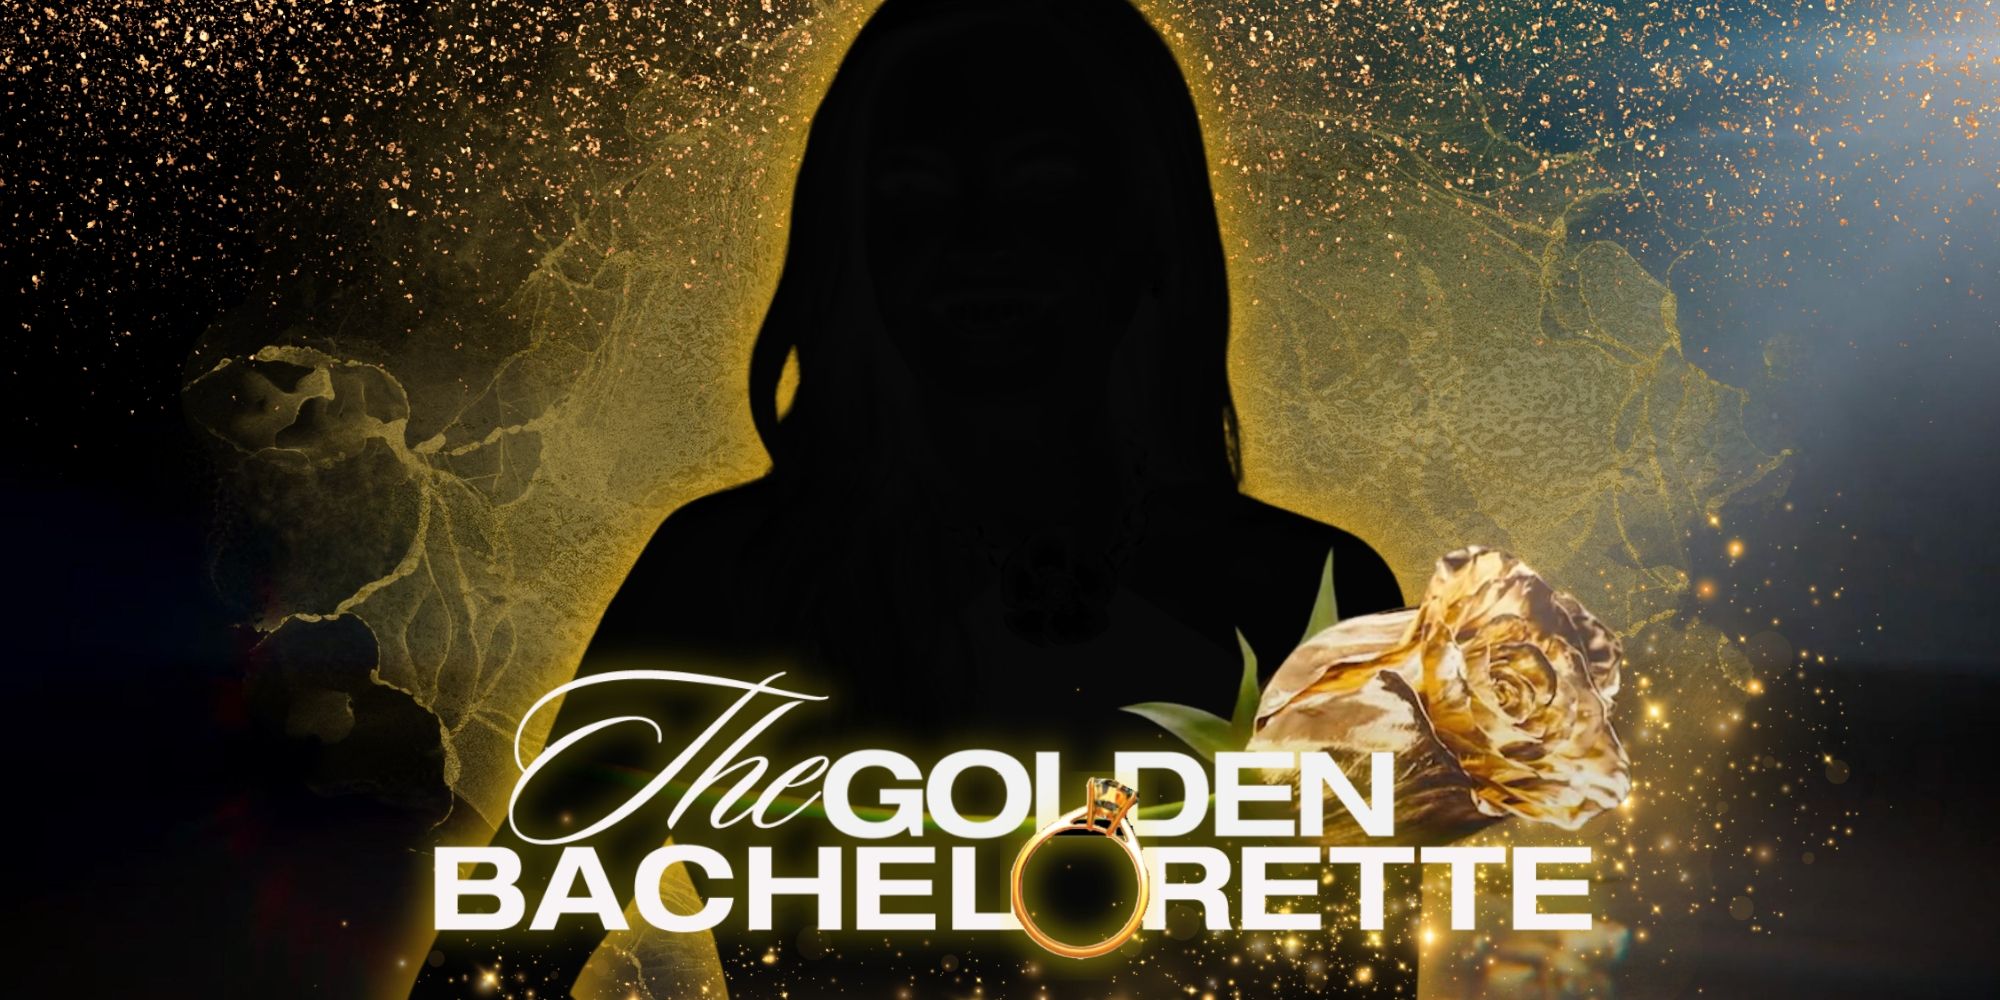 Kathie Lee Gifford solo se unirá a The Golden Bachelorette si los productores realizan este cambio importante